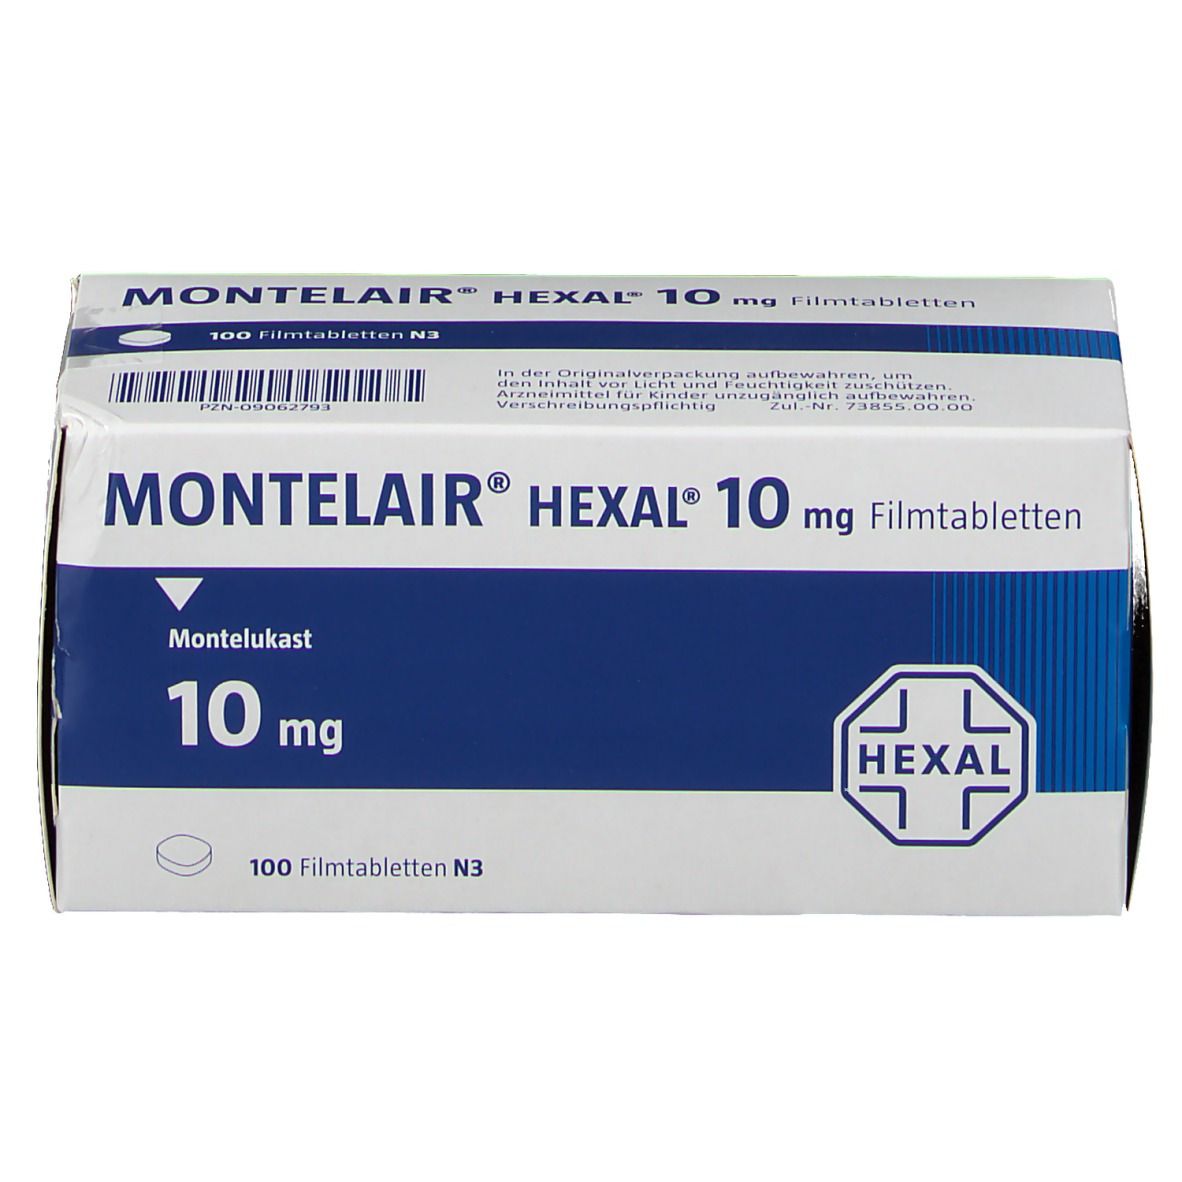 MONTELAIR® HEXAL® 10 mg